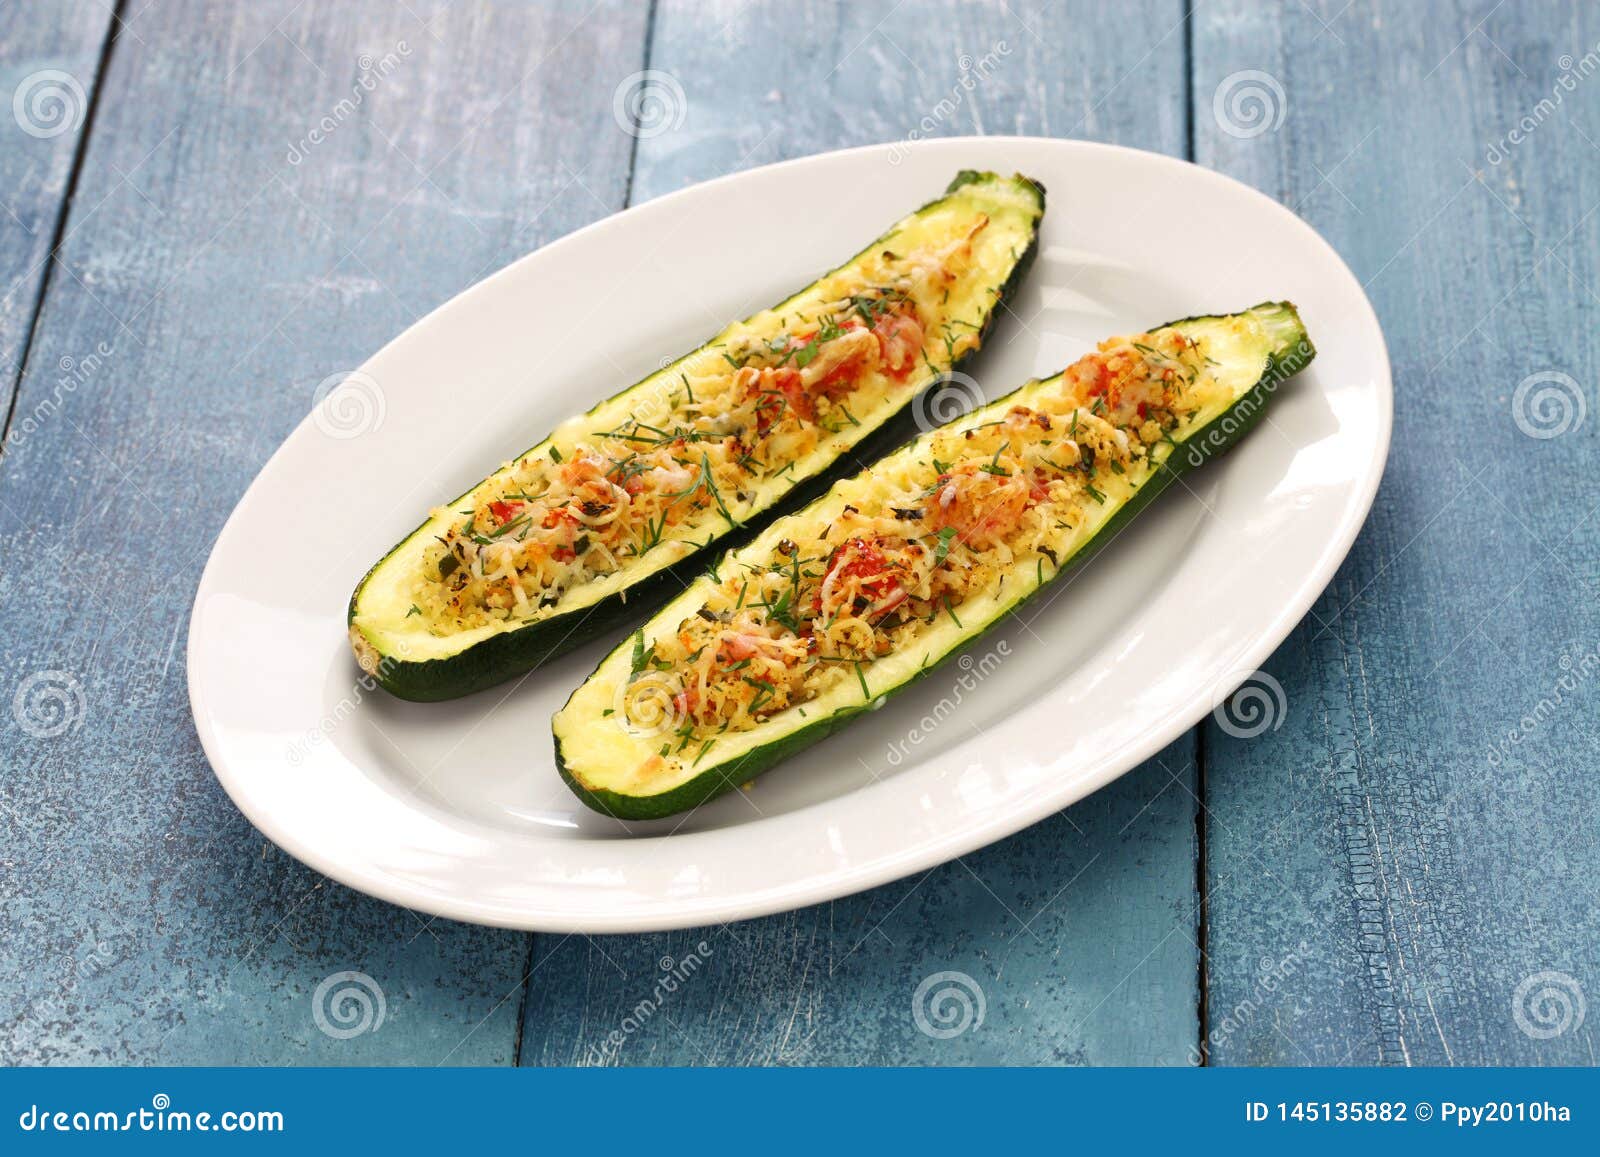 baked vegetarian zucchini boats